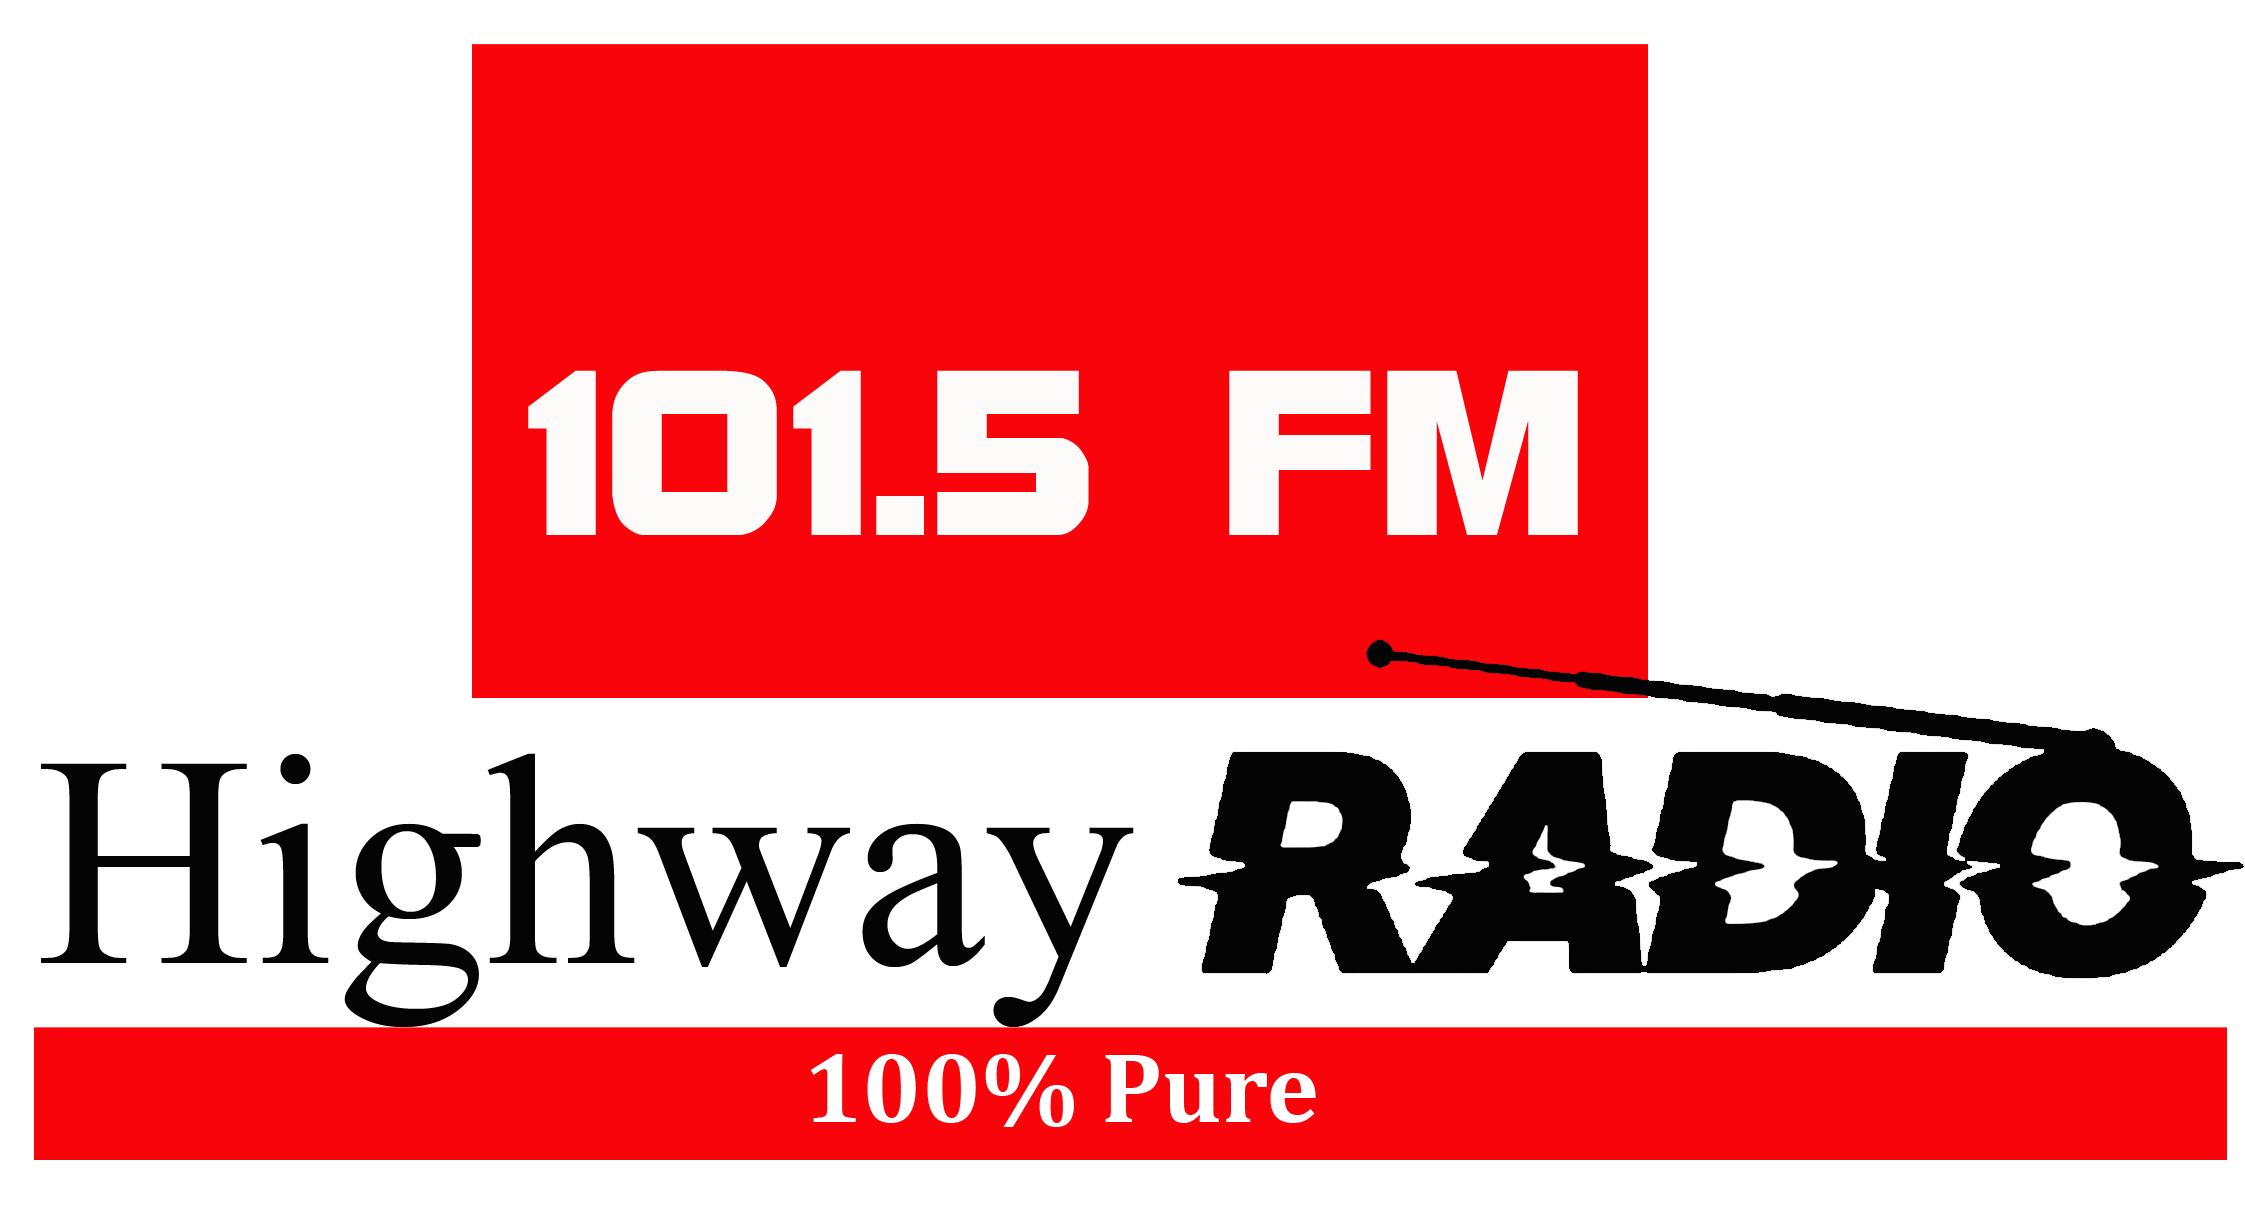 Highway Logo - highwayradio logo. Highway Radio 101.5 FM